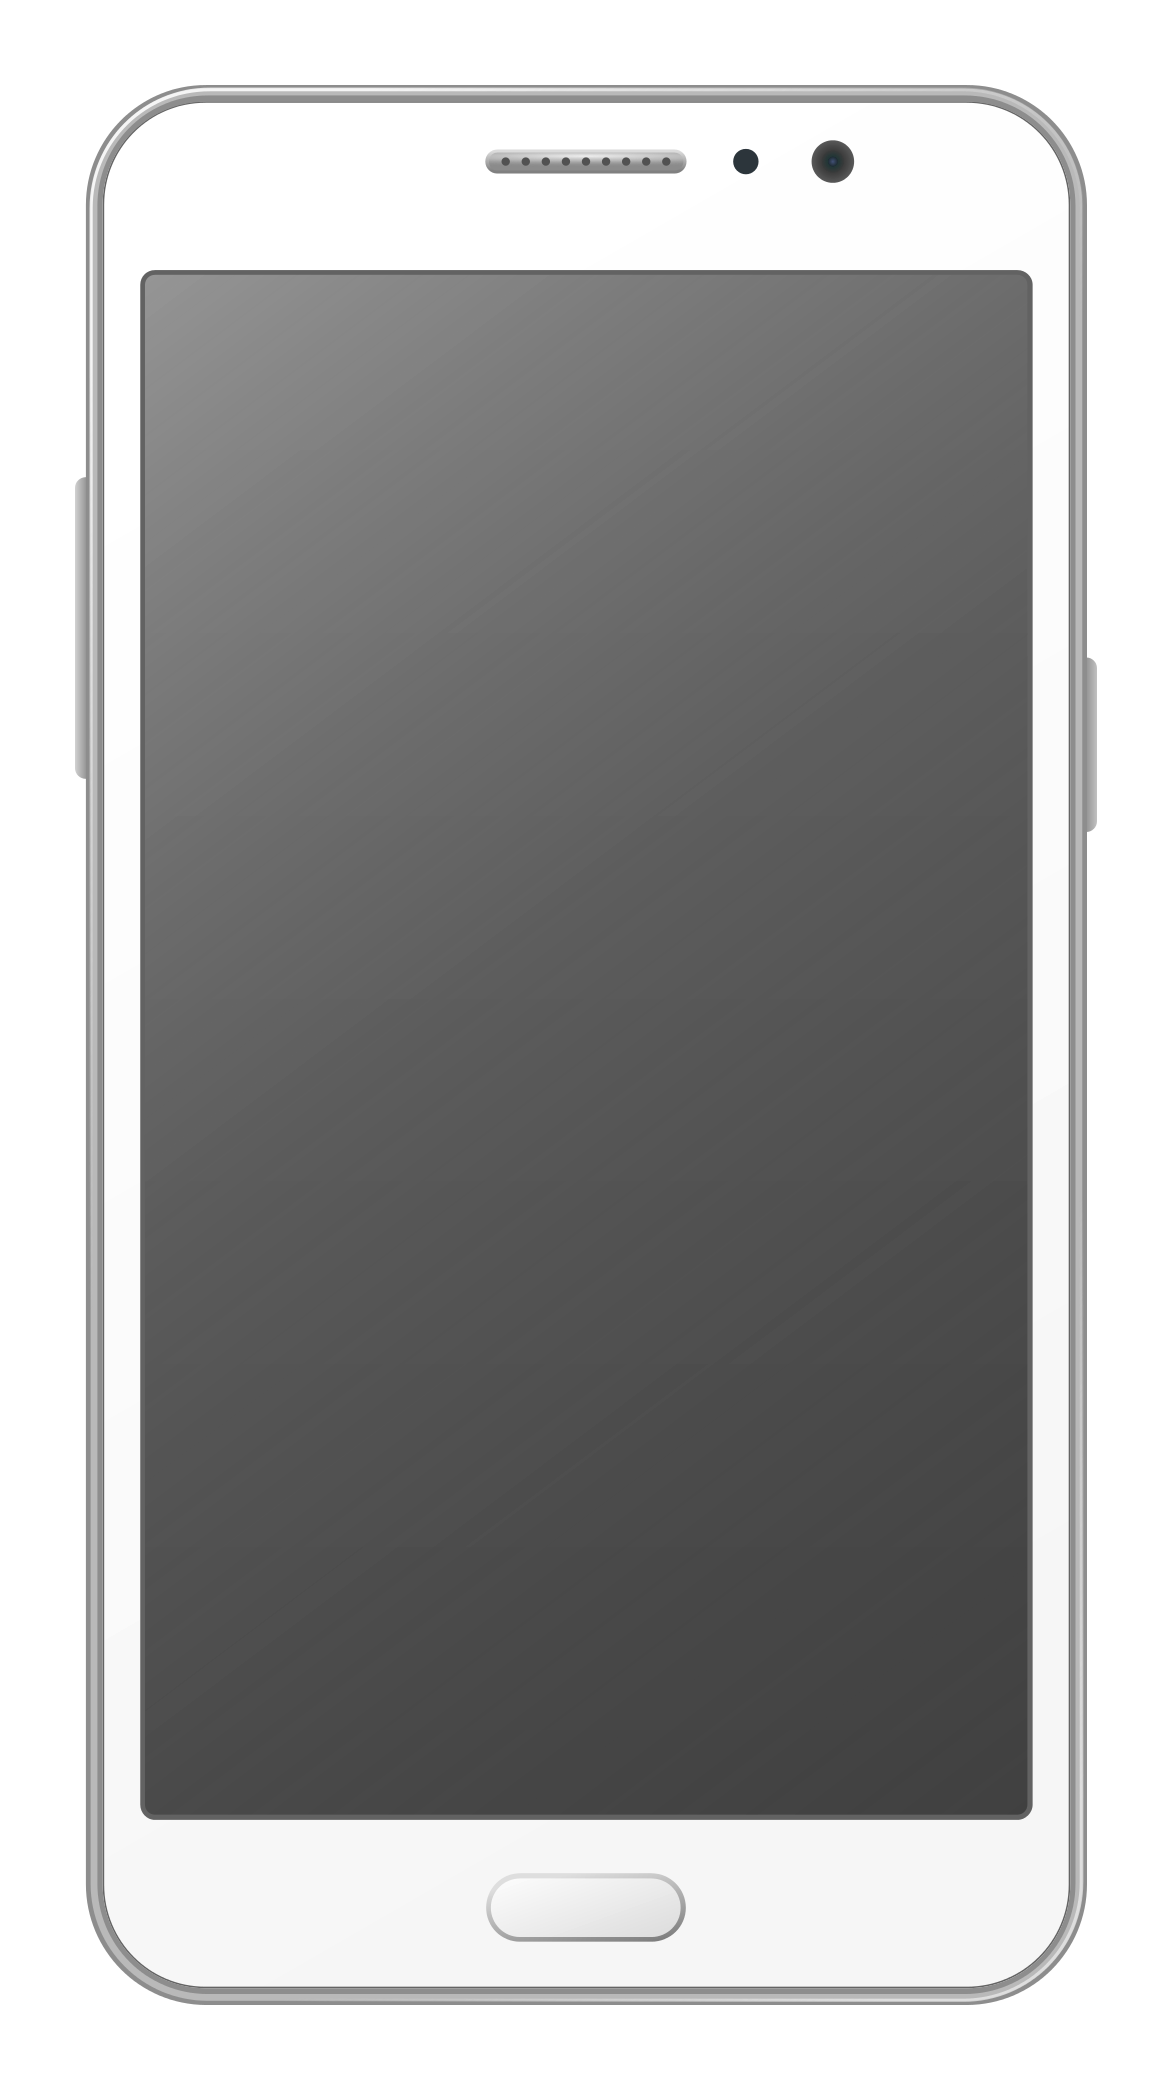 smartphone vector png transparent image #12068